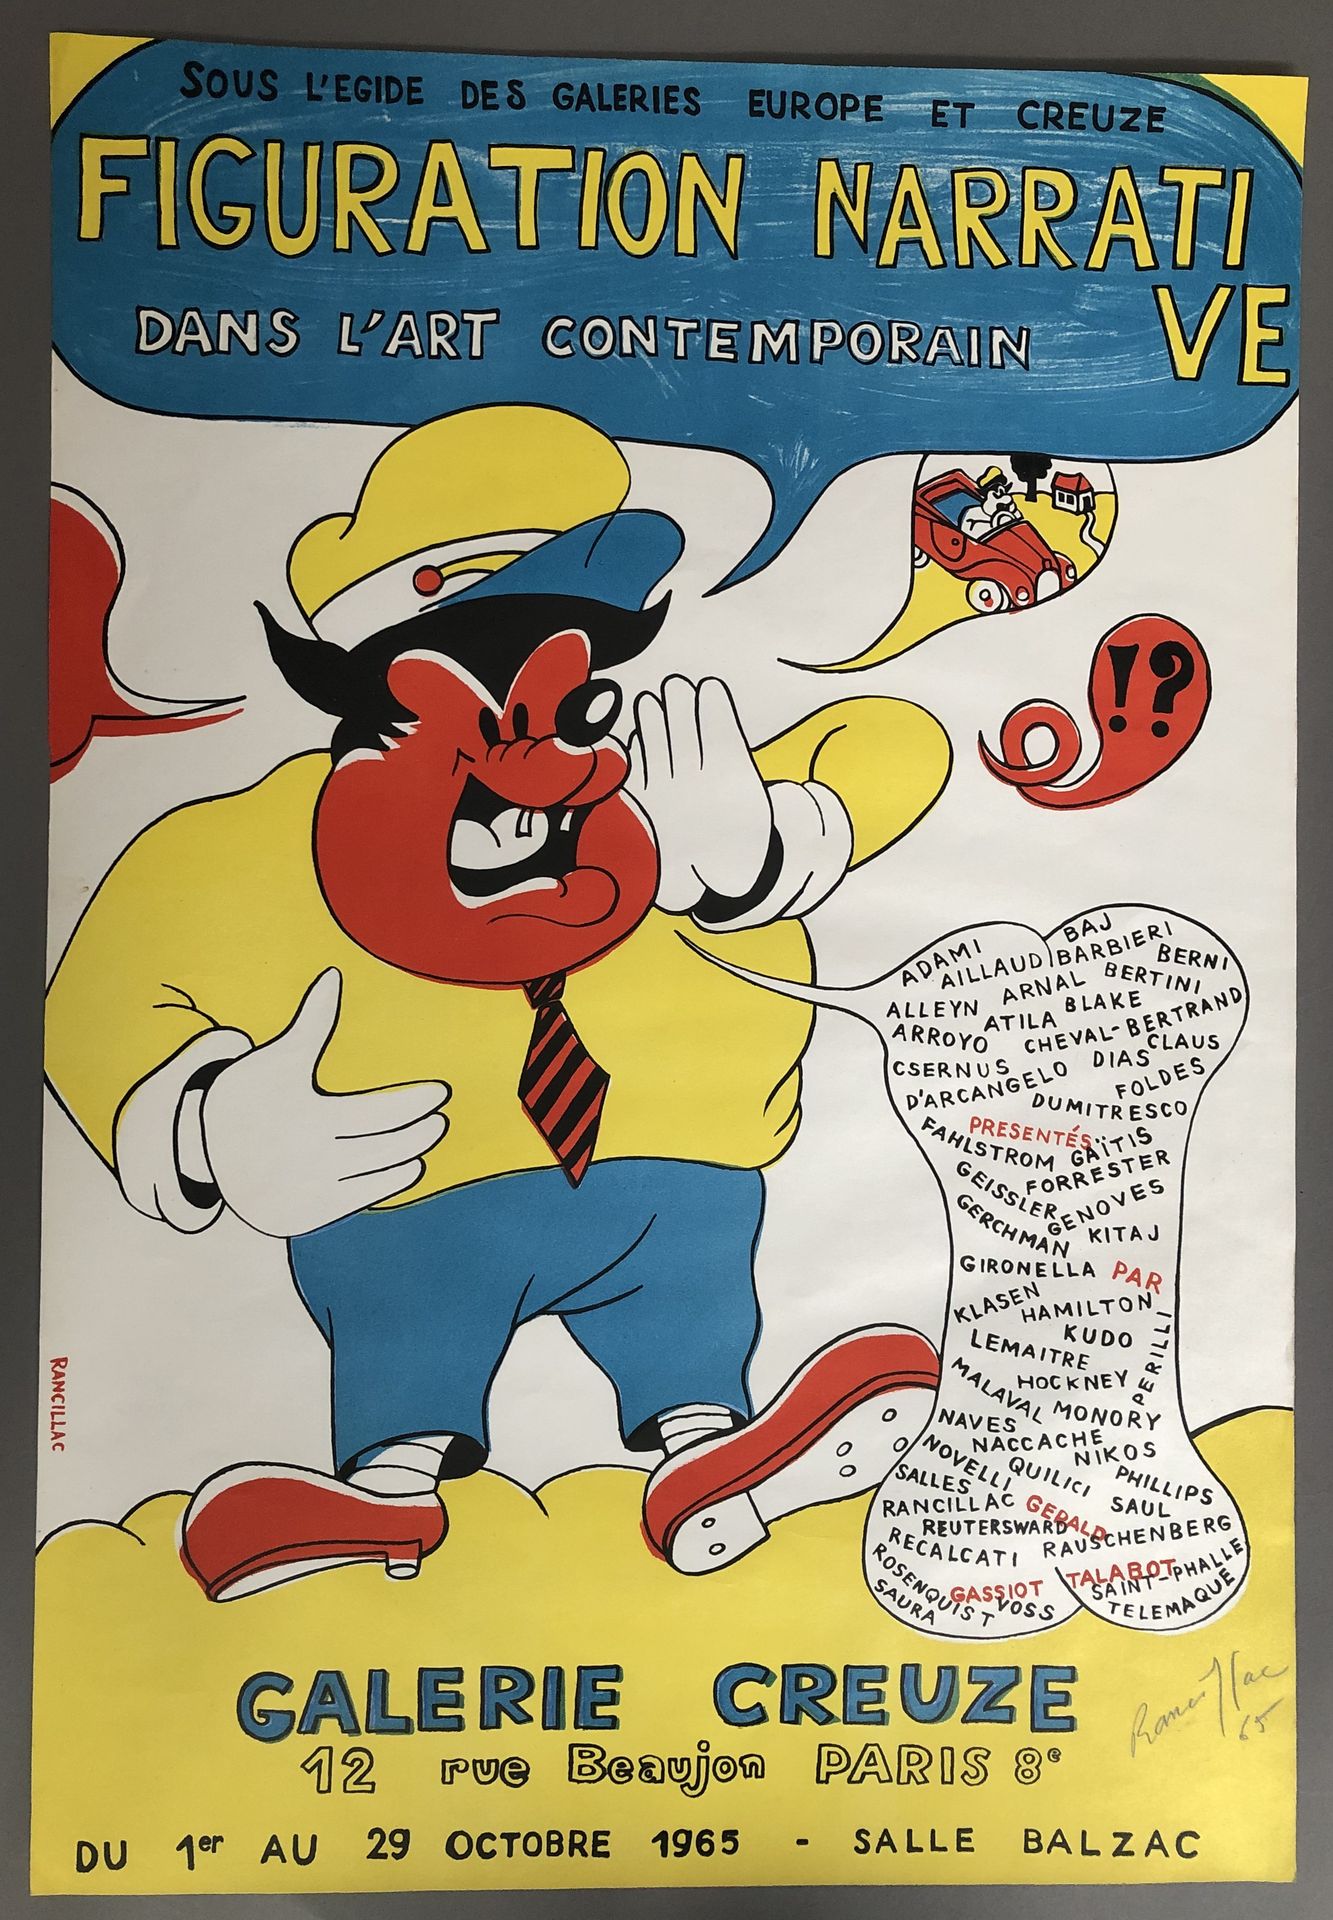 Null Creuze画廊 "当代艺术中的叙事形象 "展览的海报，由Bernard Rancillac指导，巴黎，1965年。

右下方有铅笔签名和日期。

7&hellip;